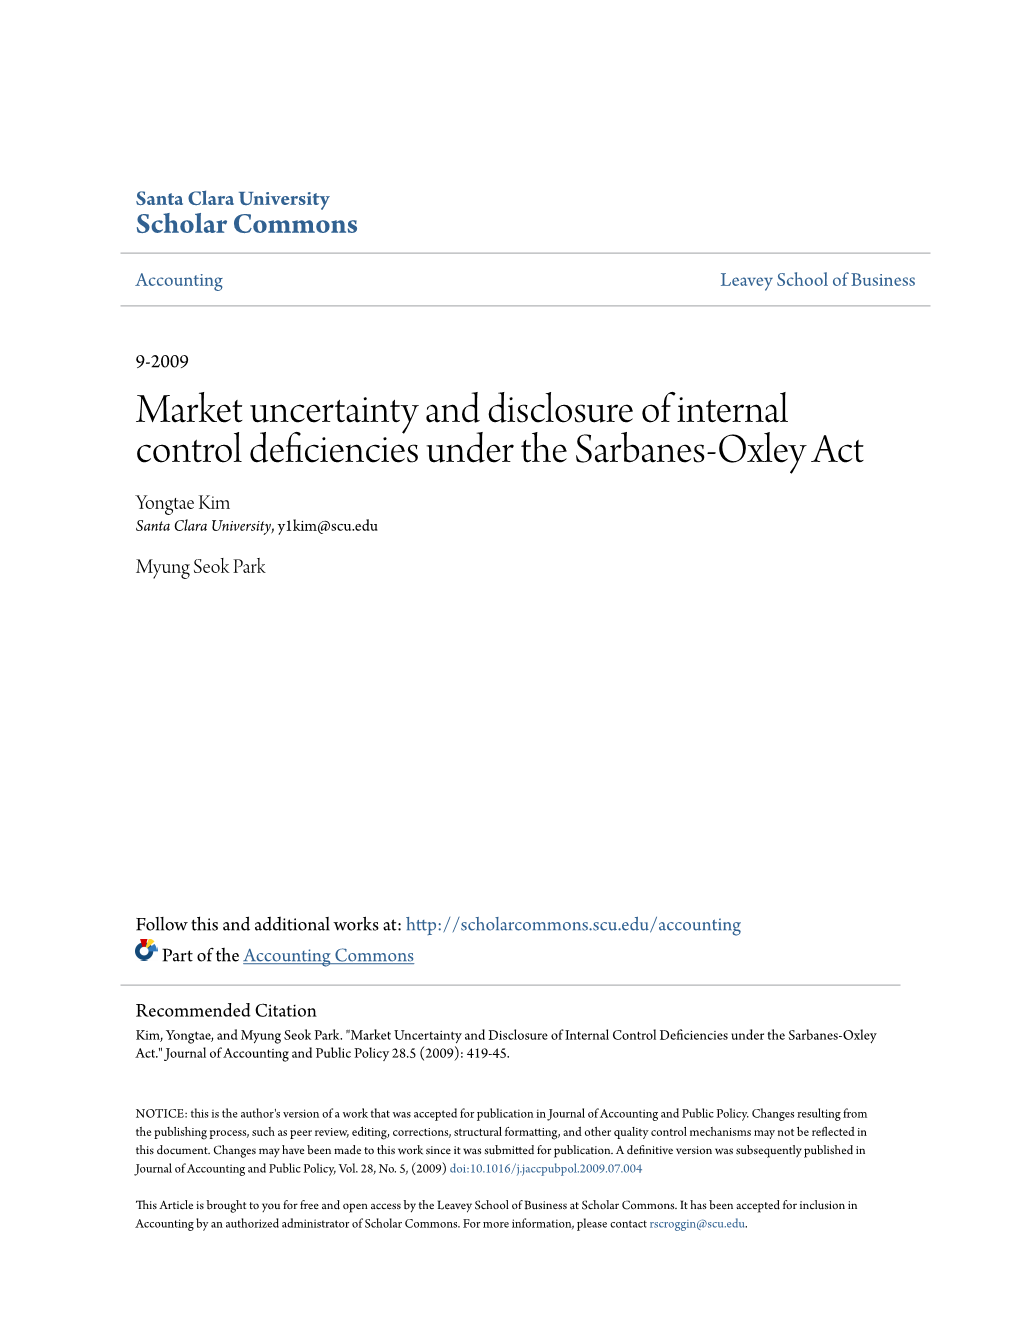 Market Uncertainty and Disclosure of Internal Control Deficiencies Under the Sarbanes-Oxley Act Yongtae Kim Santa Clara University, Y1kim@Scu.Edu